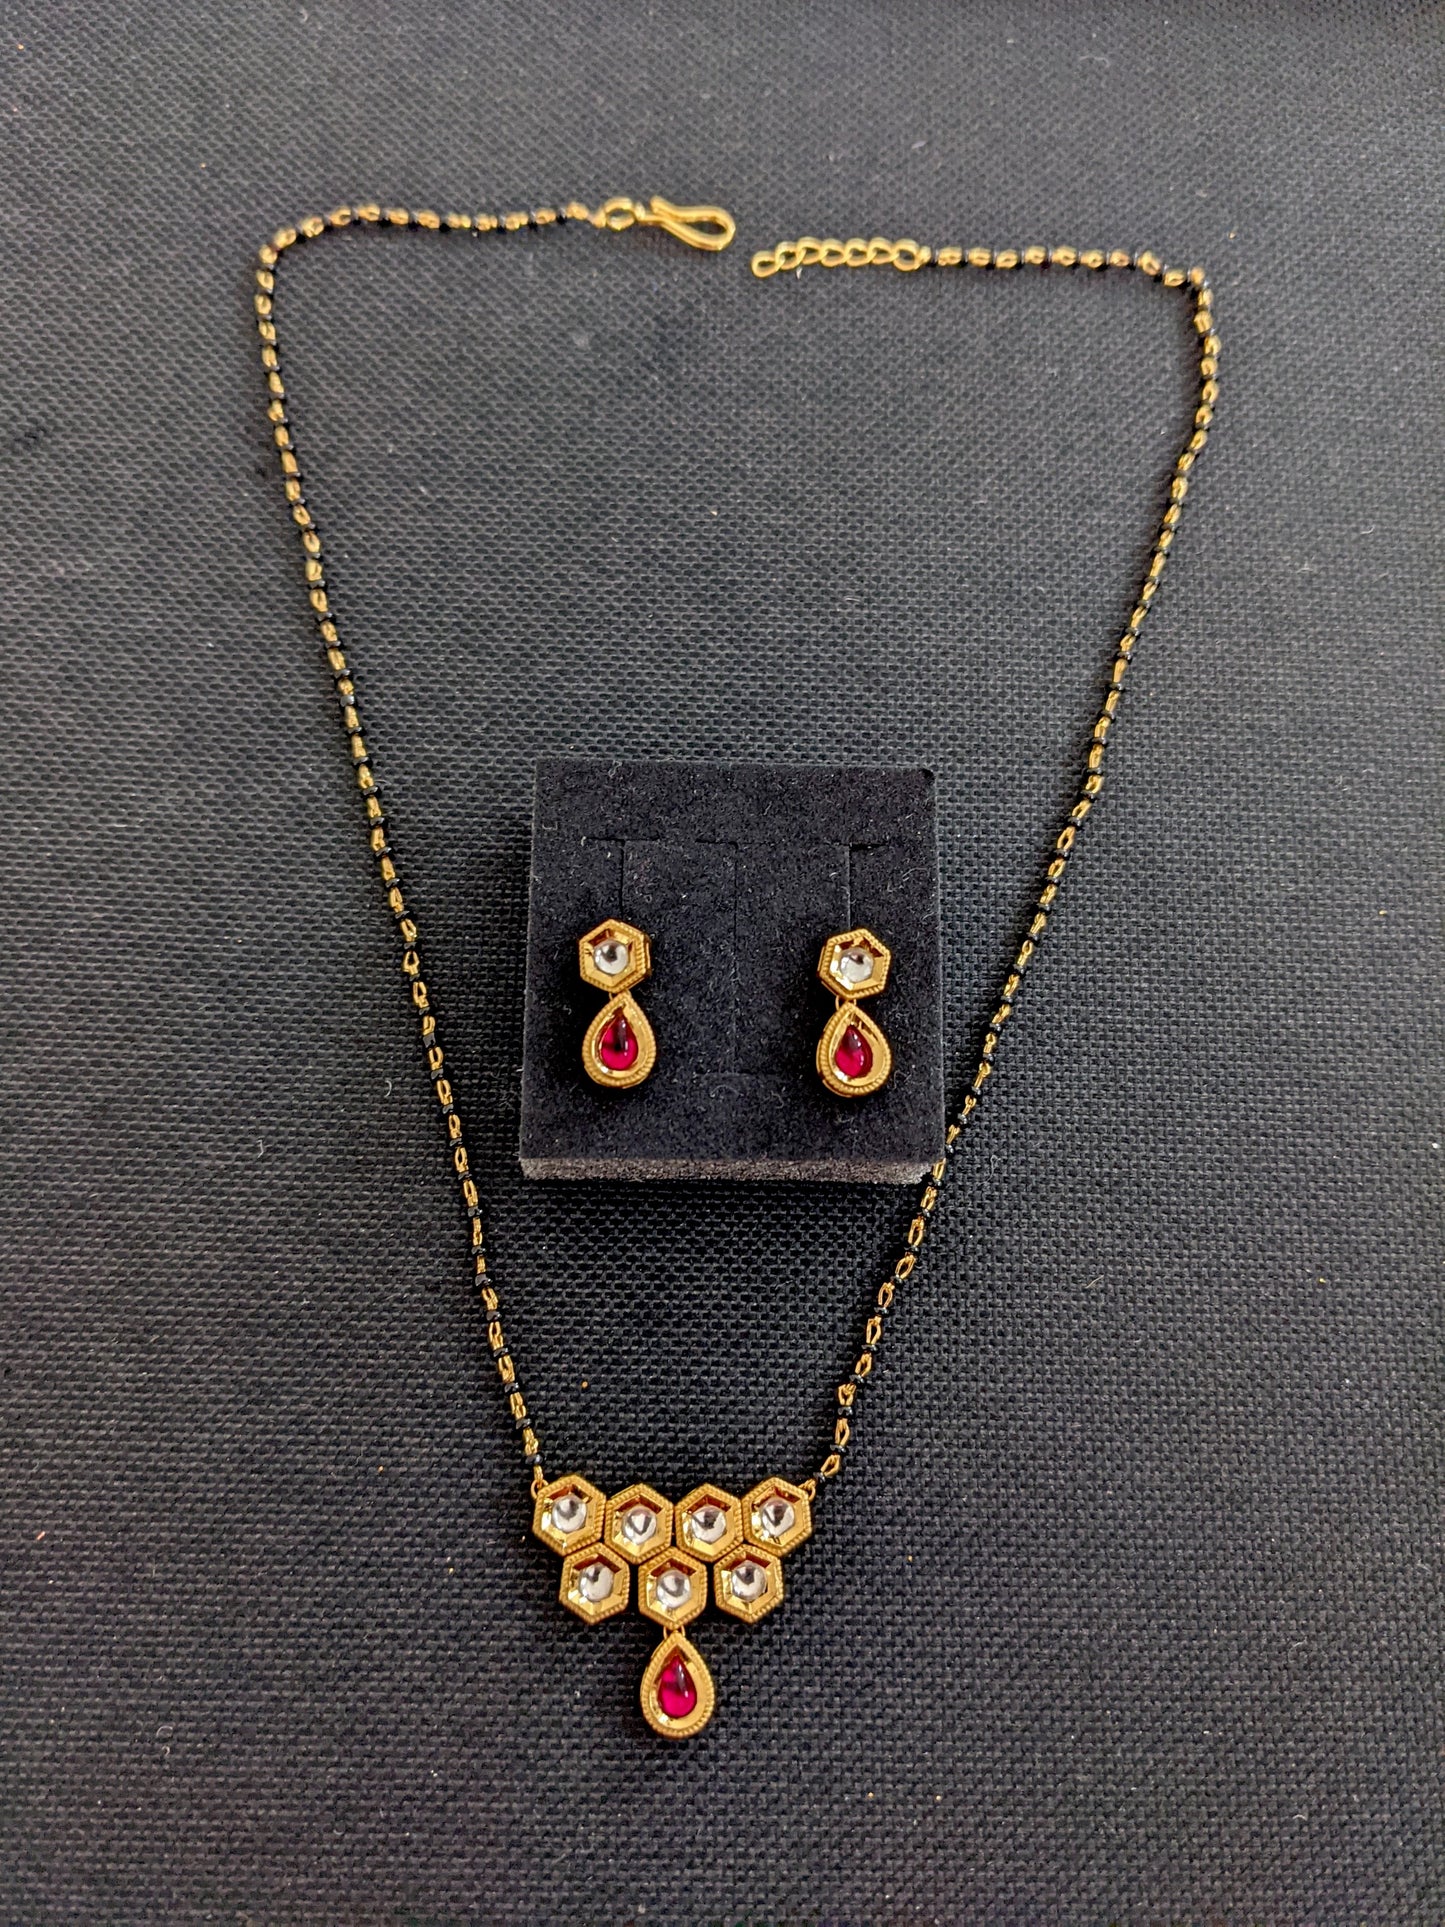 Mangalsutra - Kundan Pendant and Earrings set - Single strand chain - Design 1